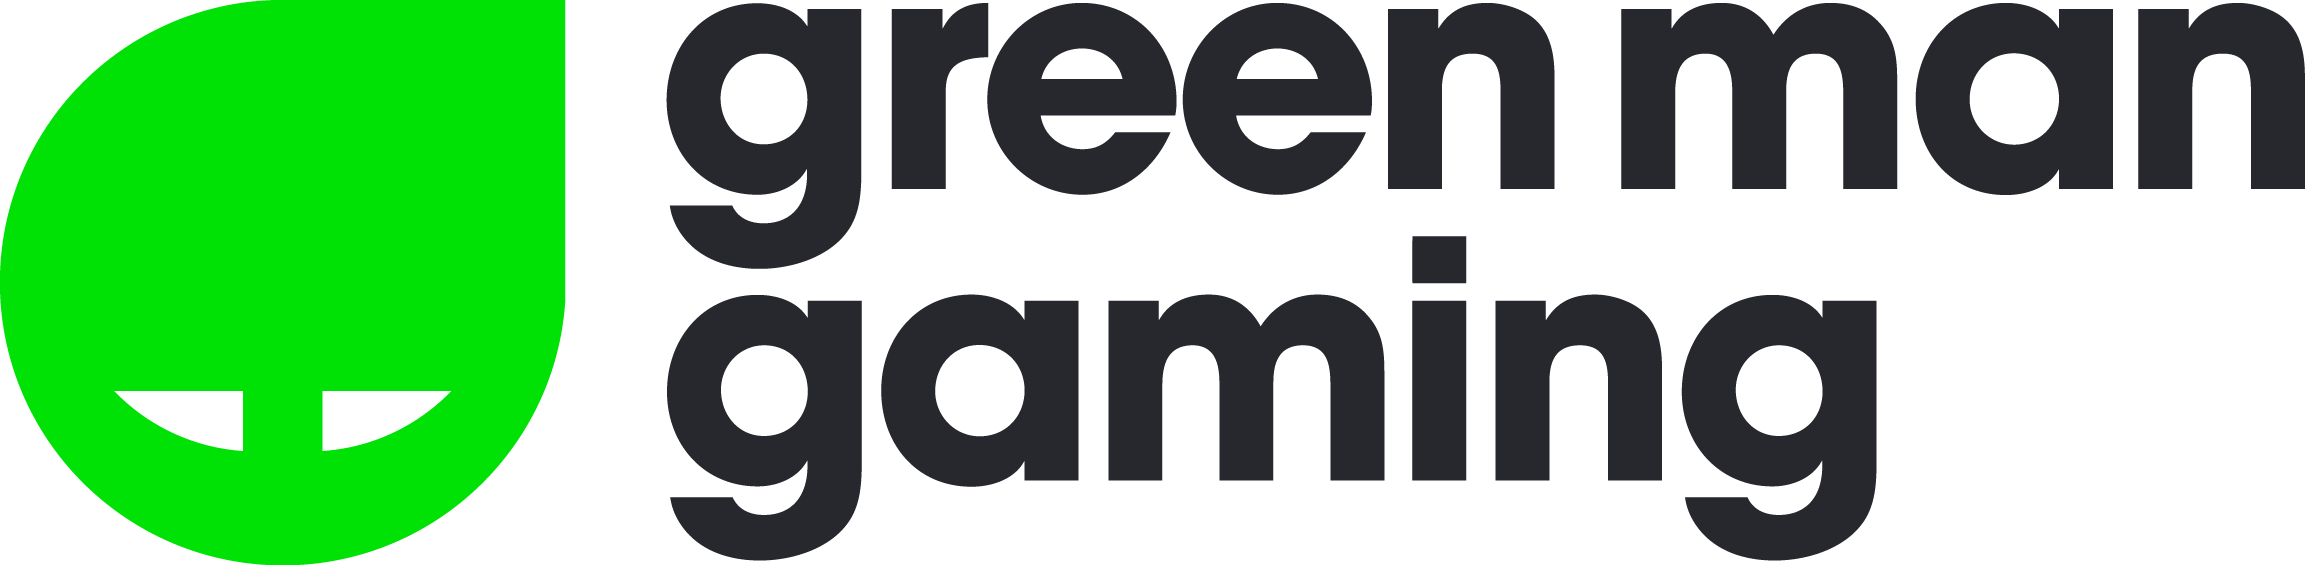 Green-Man-Gaming-logo_RGB_Light-BG